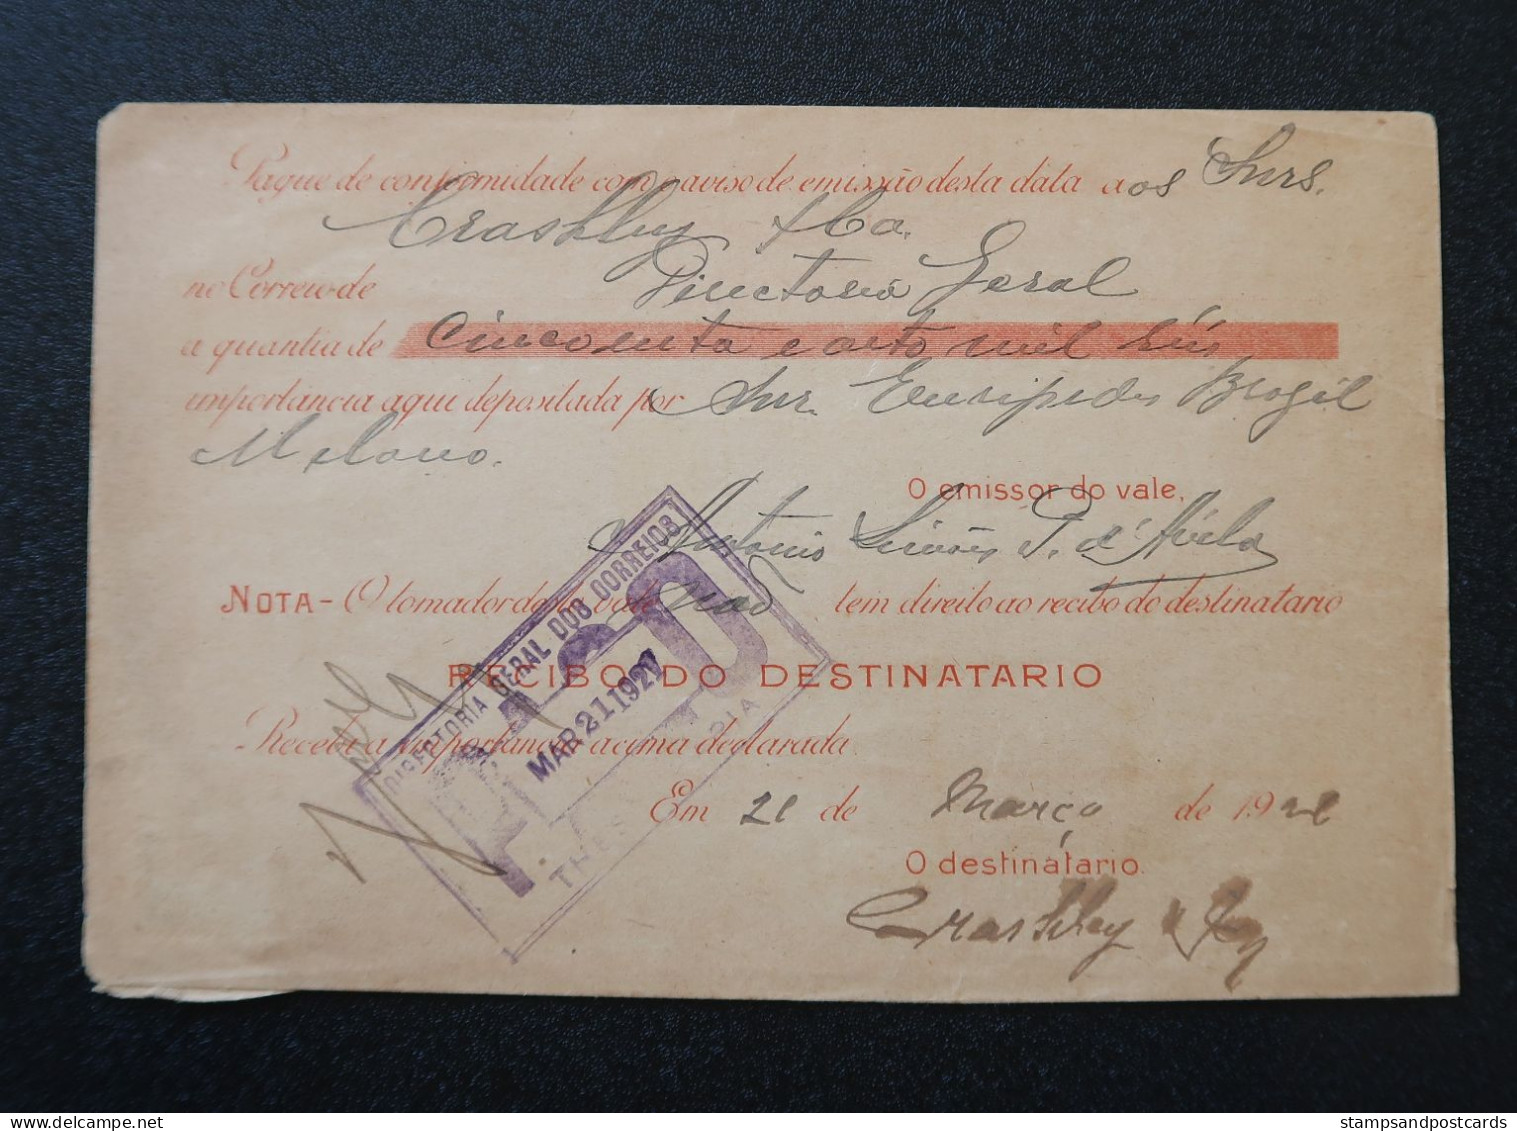 Brèsil Brasil Mandat Vale Postal 1921 Alegrete Rio Grande Do Sul Timbre Fiscal Deposito Brazil Money Order Revenue Stamp - Briefe U. Dokumente